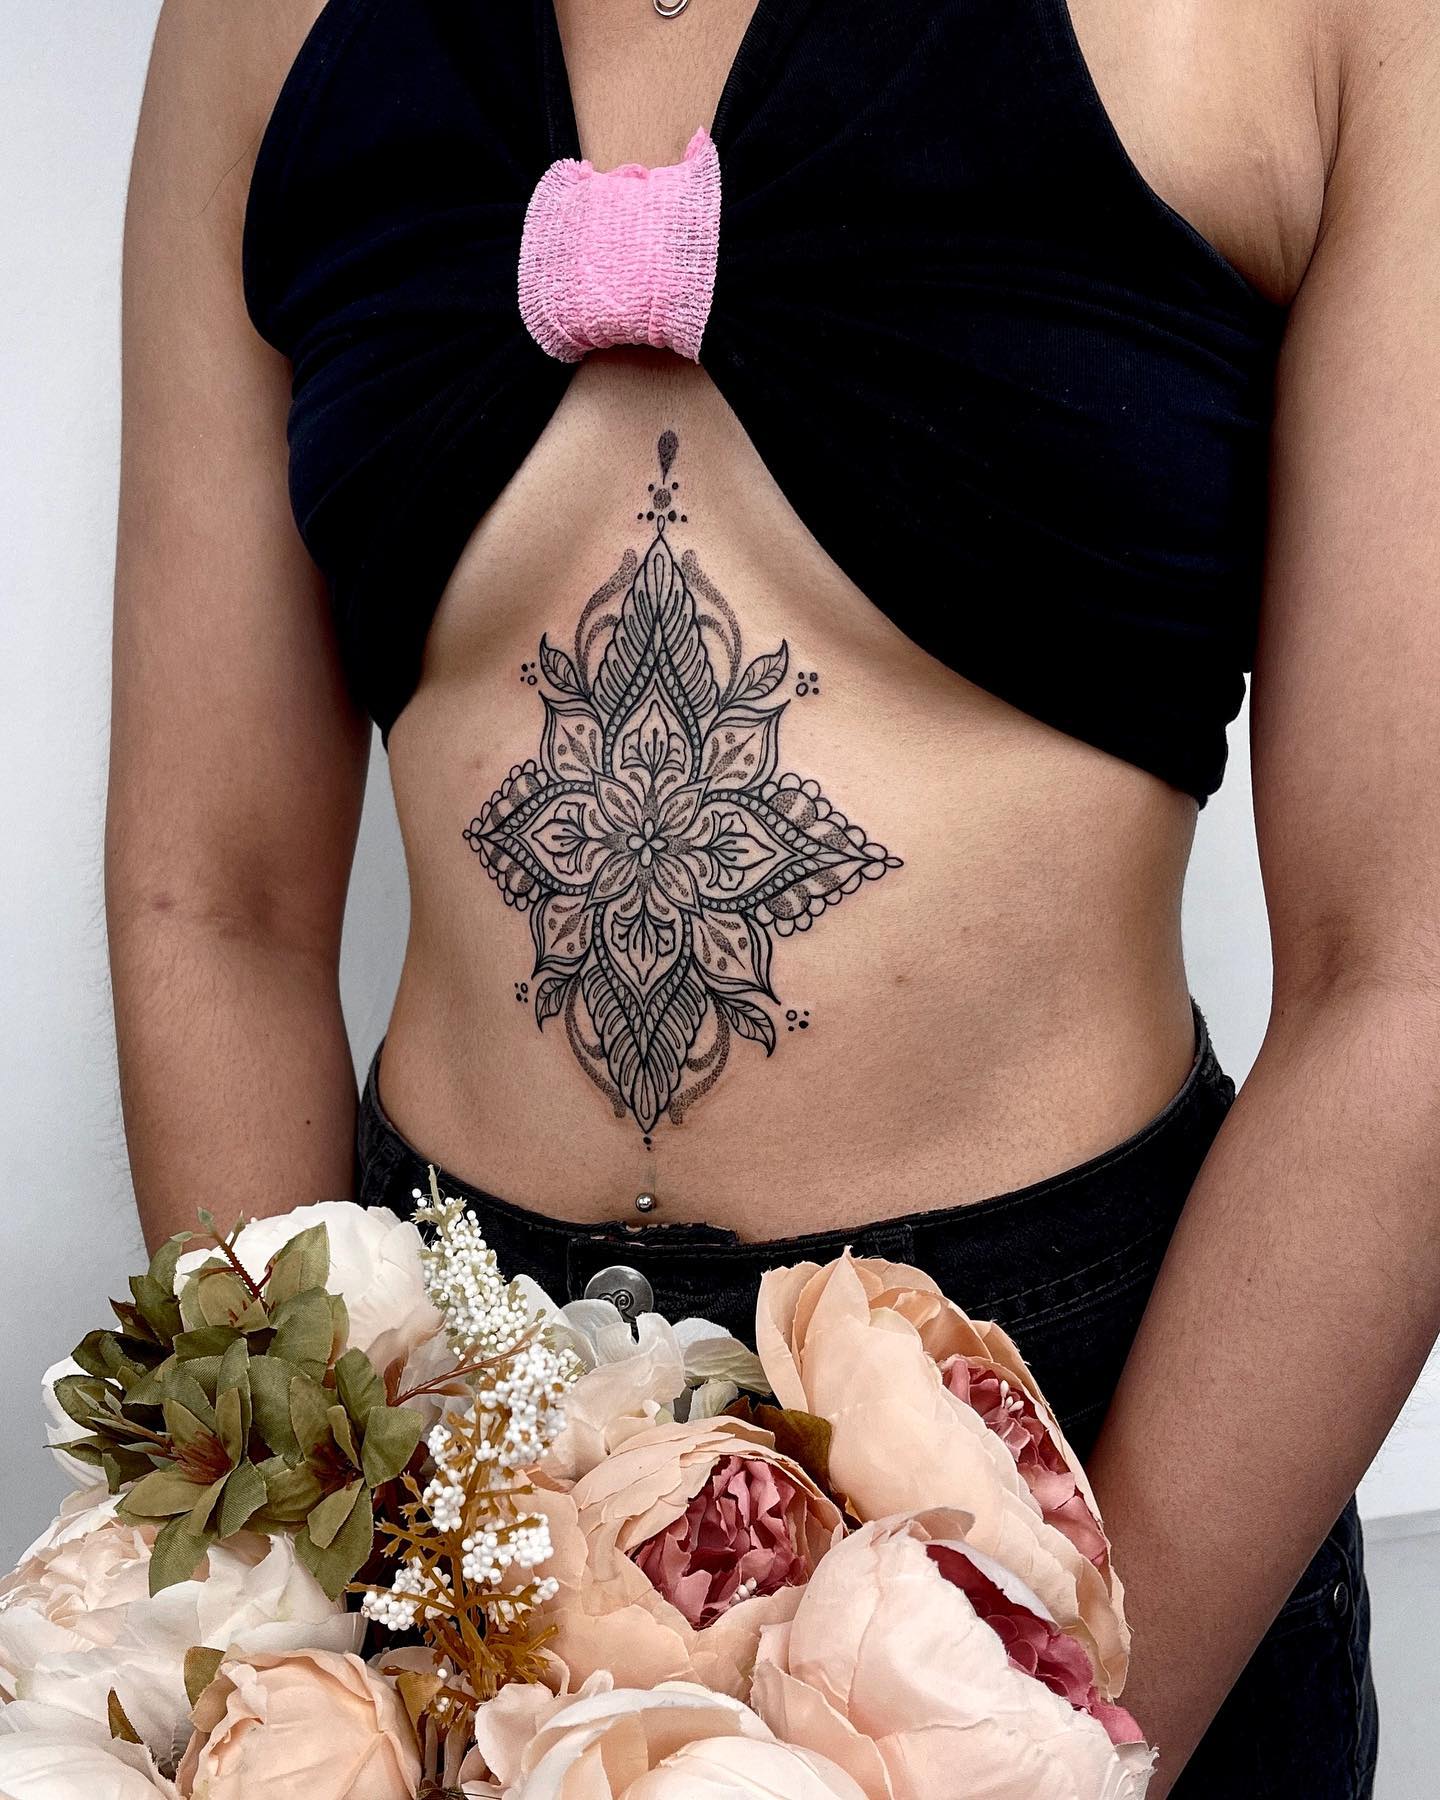 Tatuaje de gran mandala entre los senos.